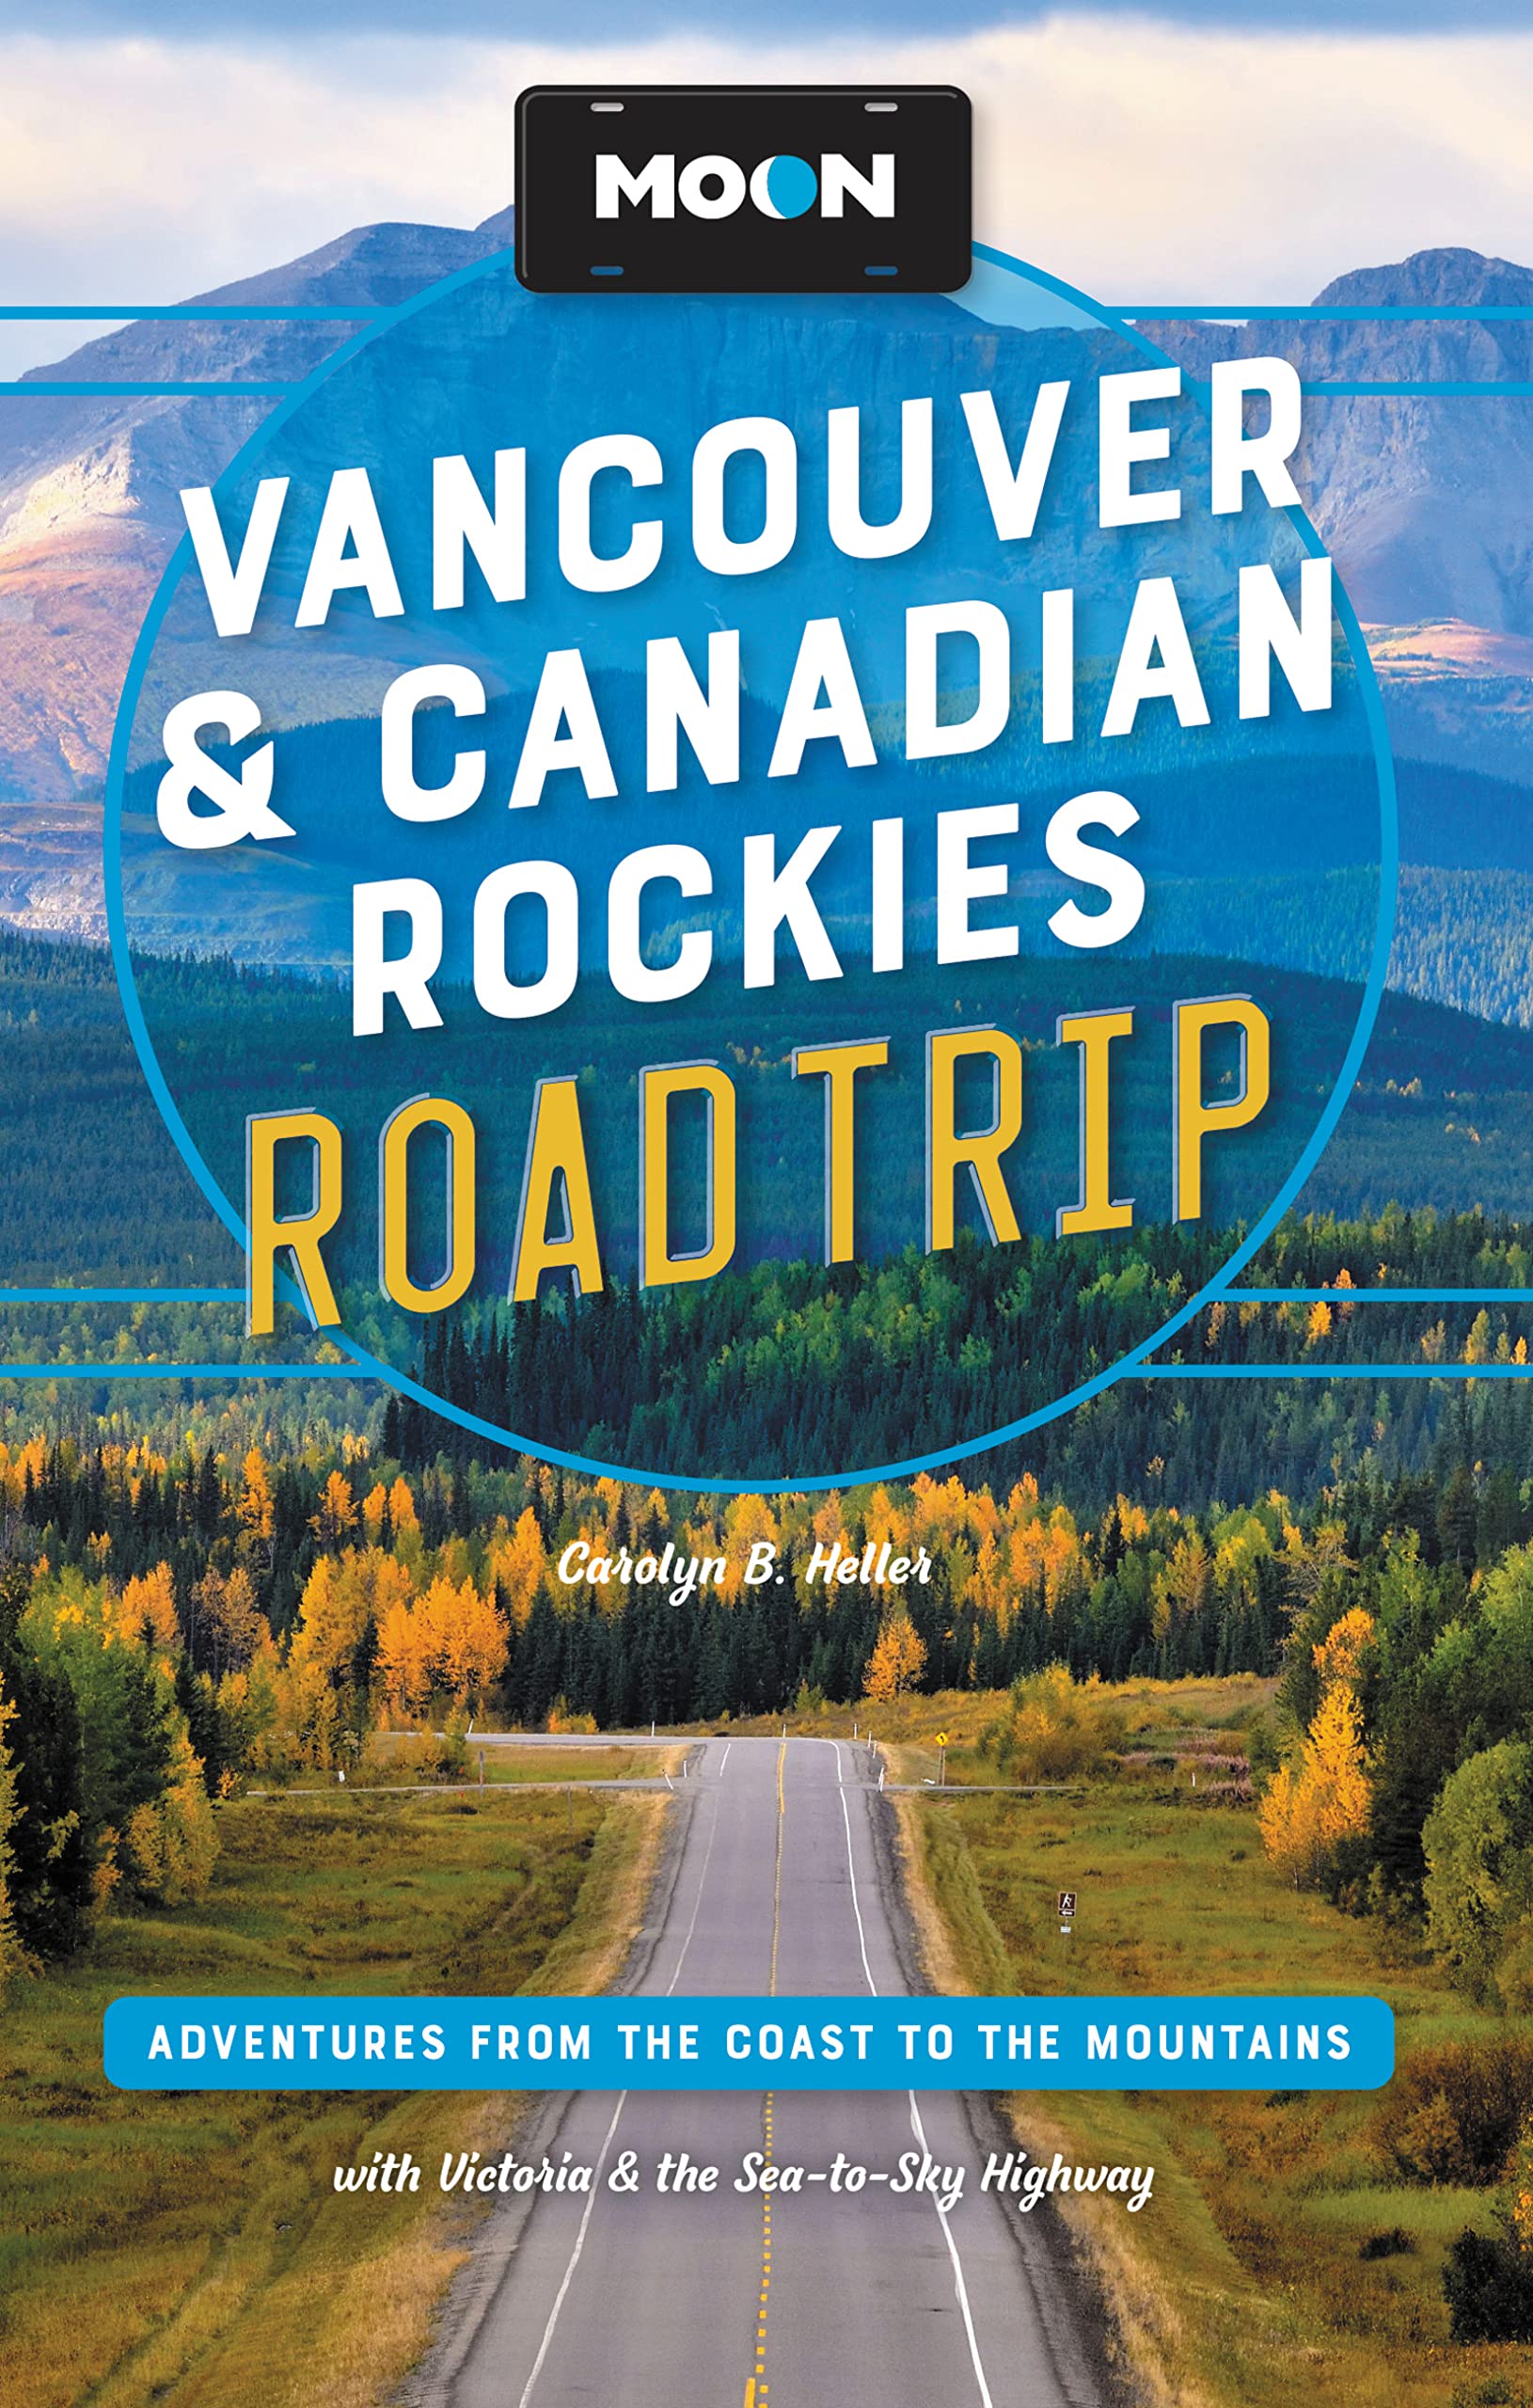 Vancouver & Canadian Rockies Road Trip Moon 3e